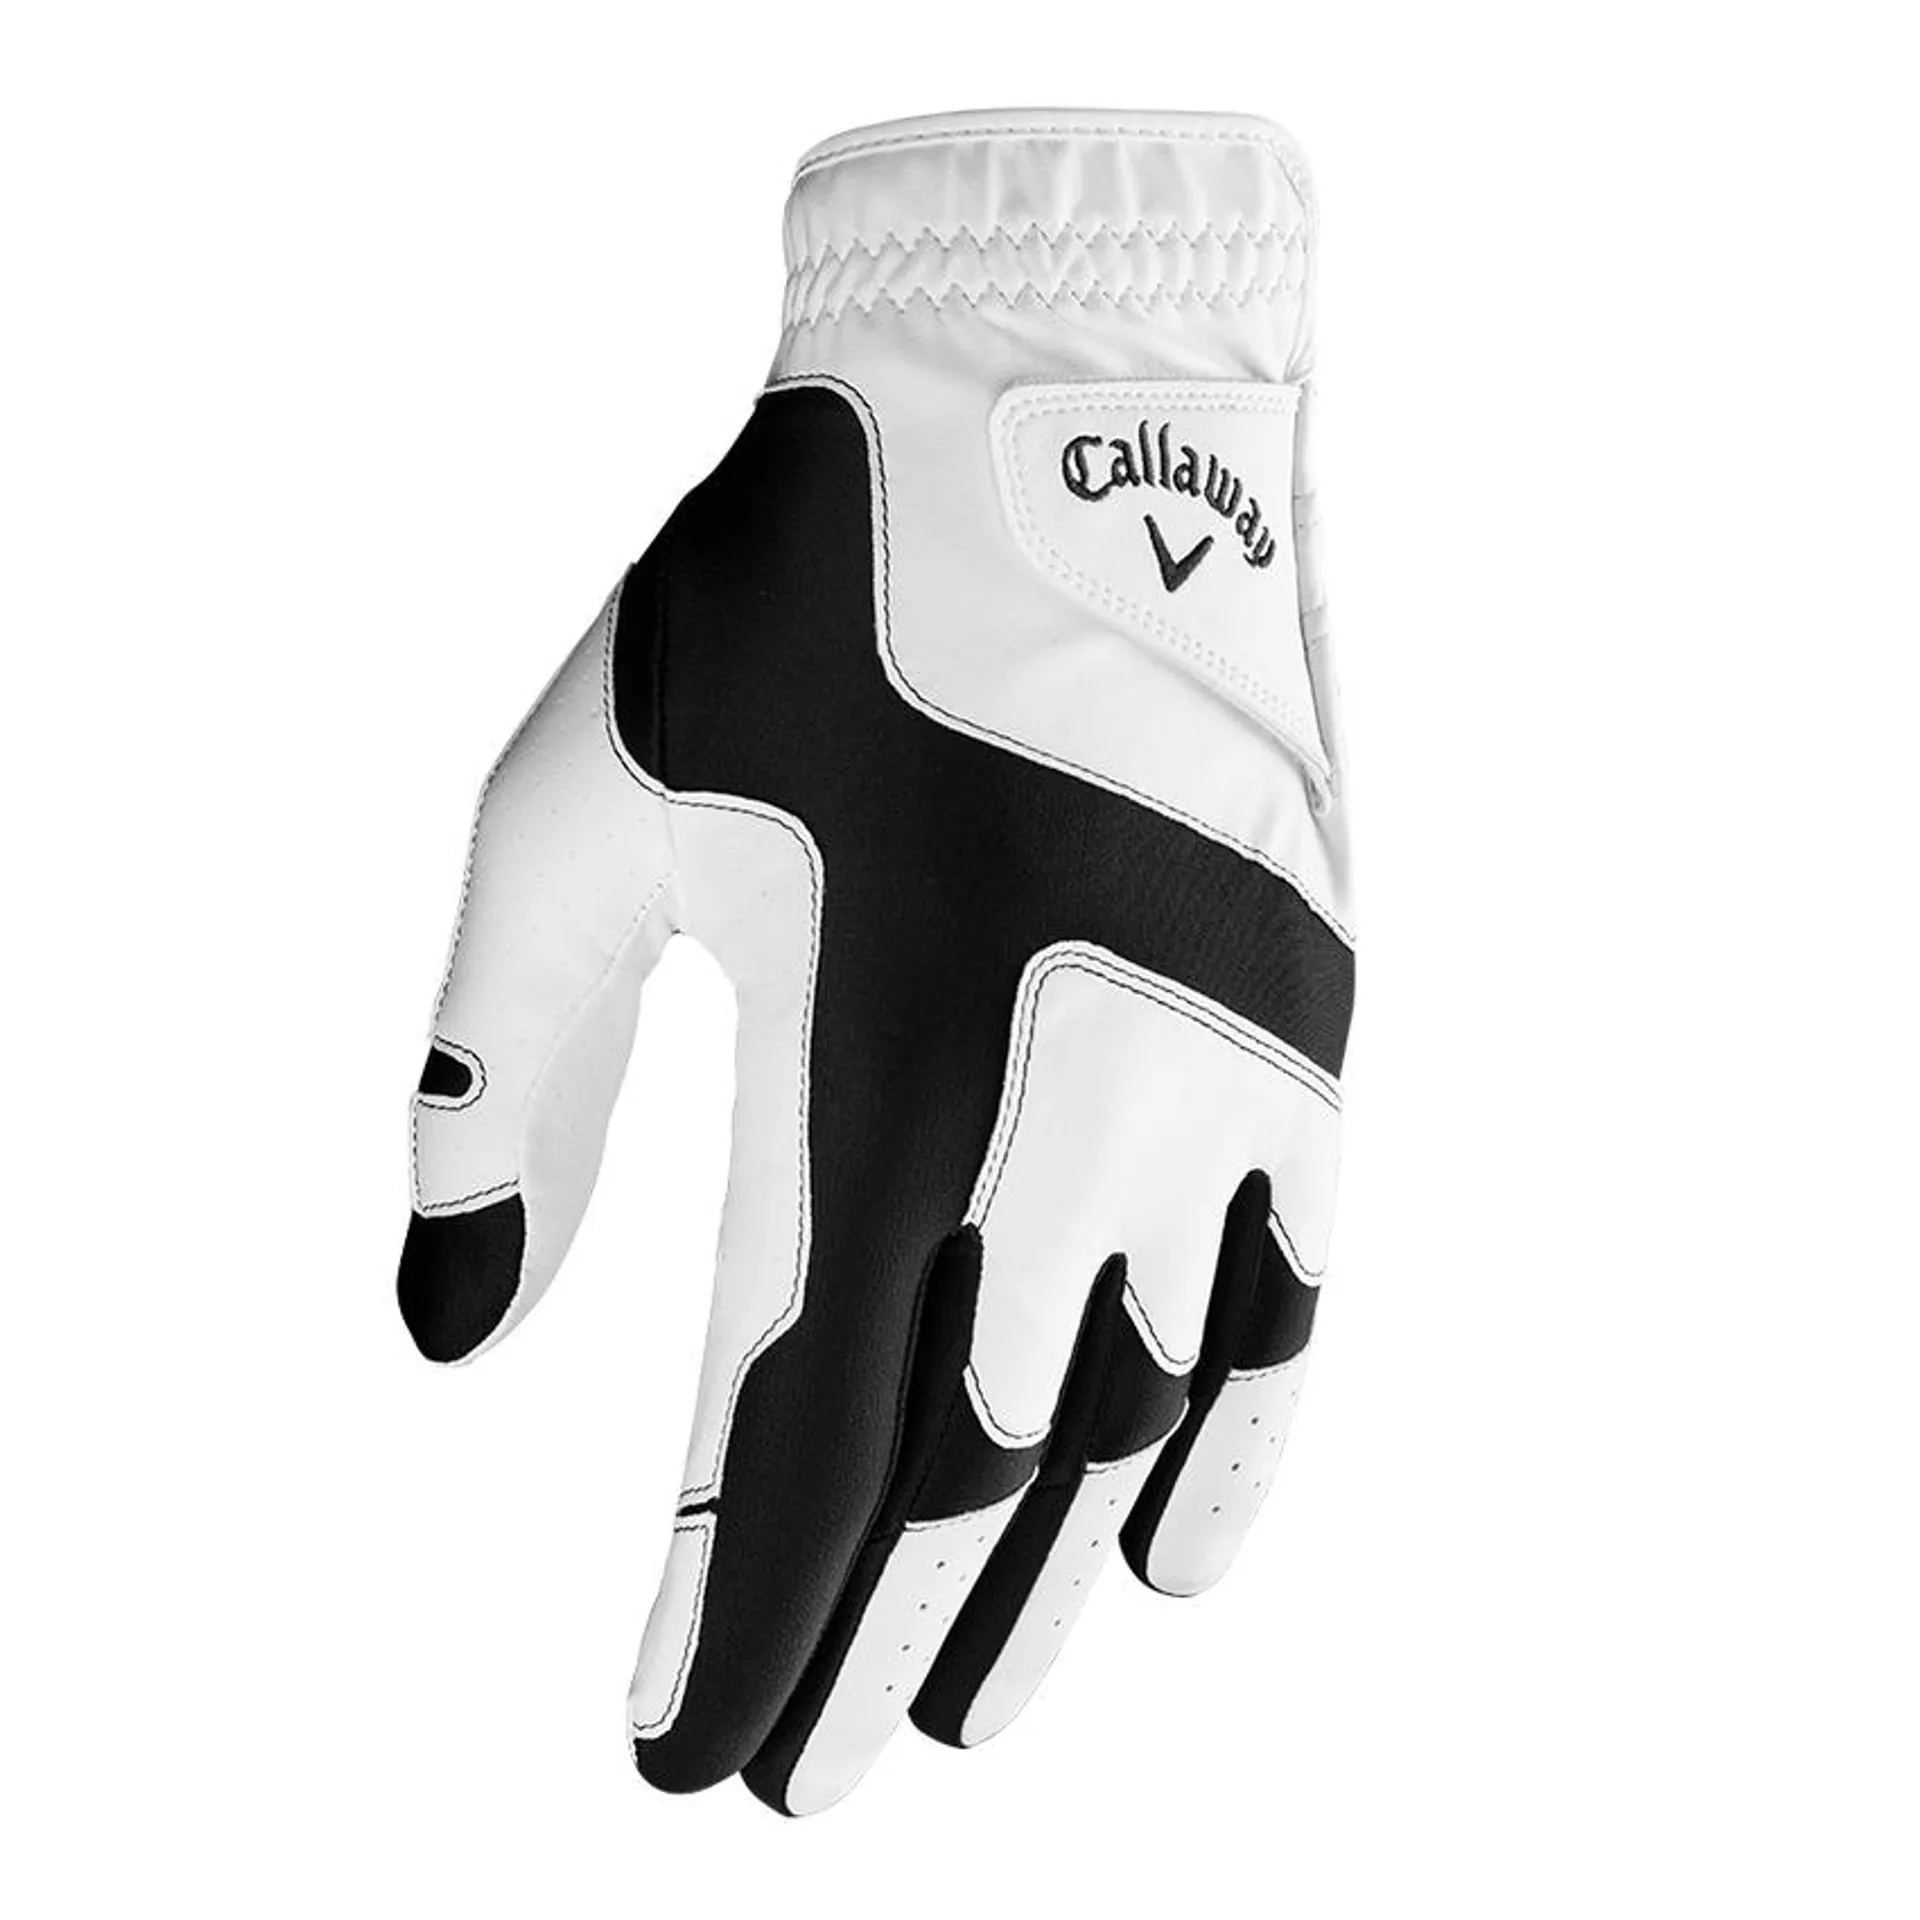 Opti-Fit Gloves